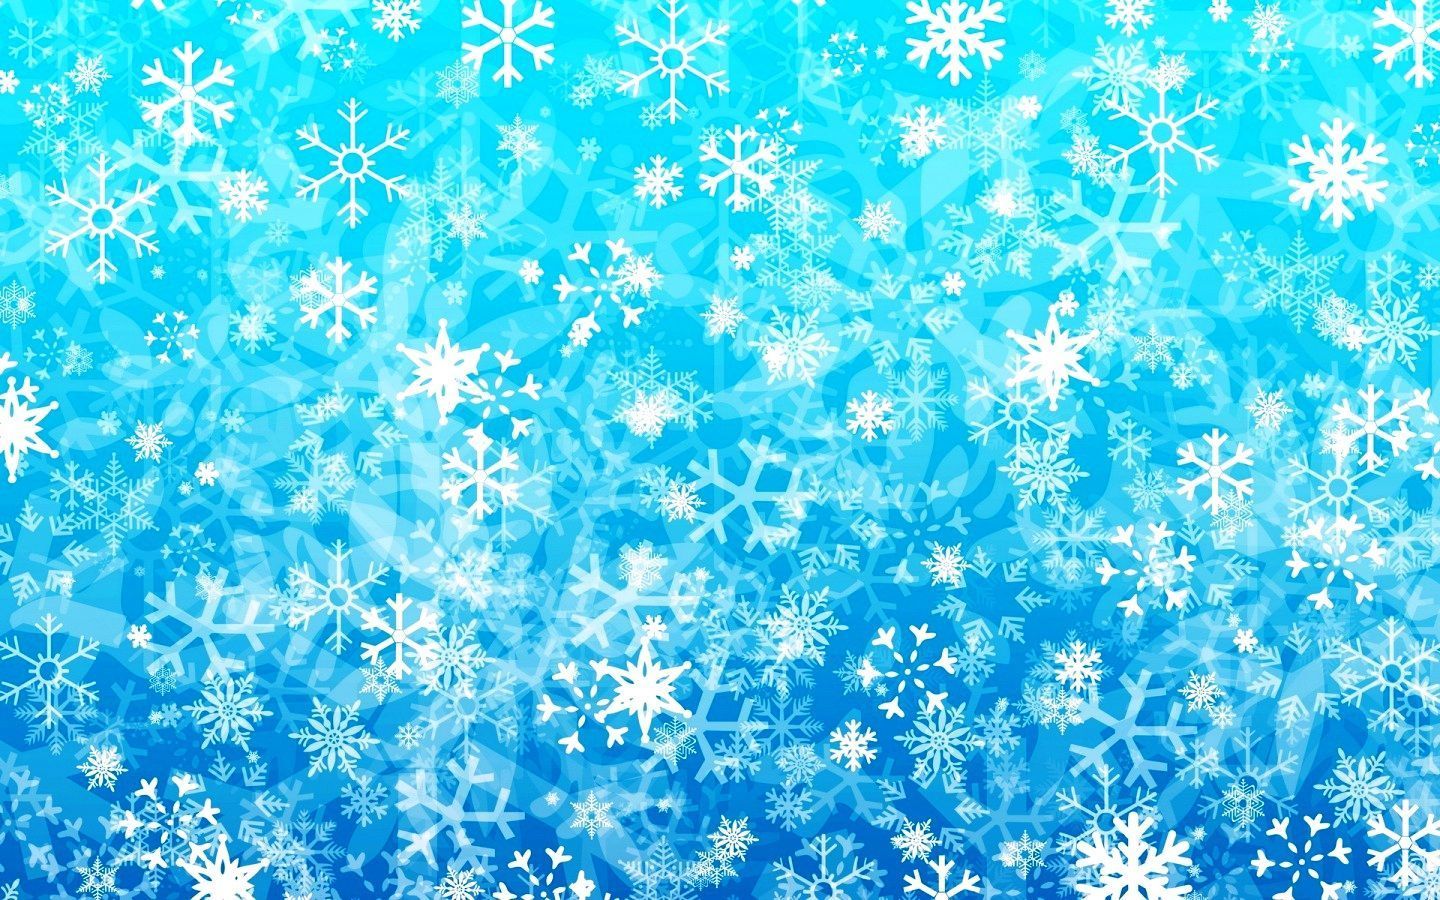 Snowflake Desktop Wallpaper Snowflake In The Snow photos of ...